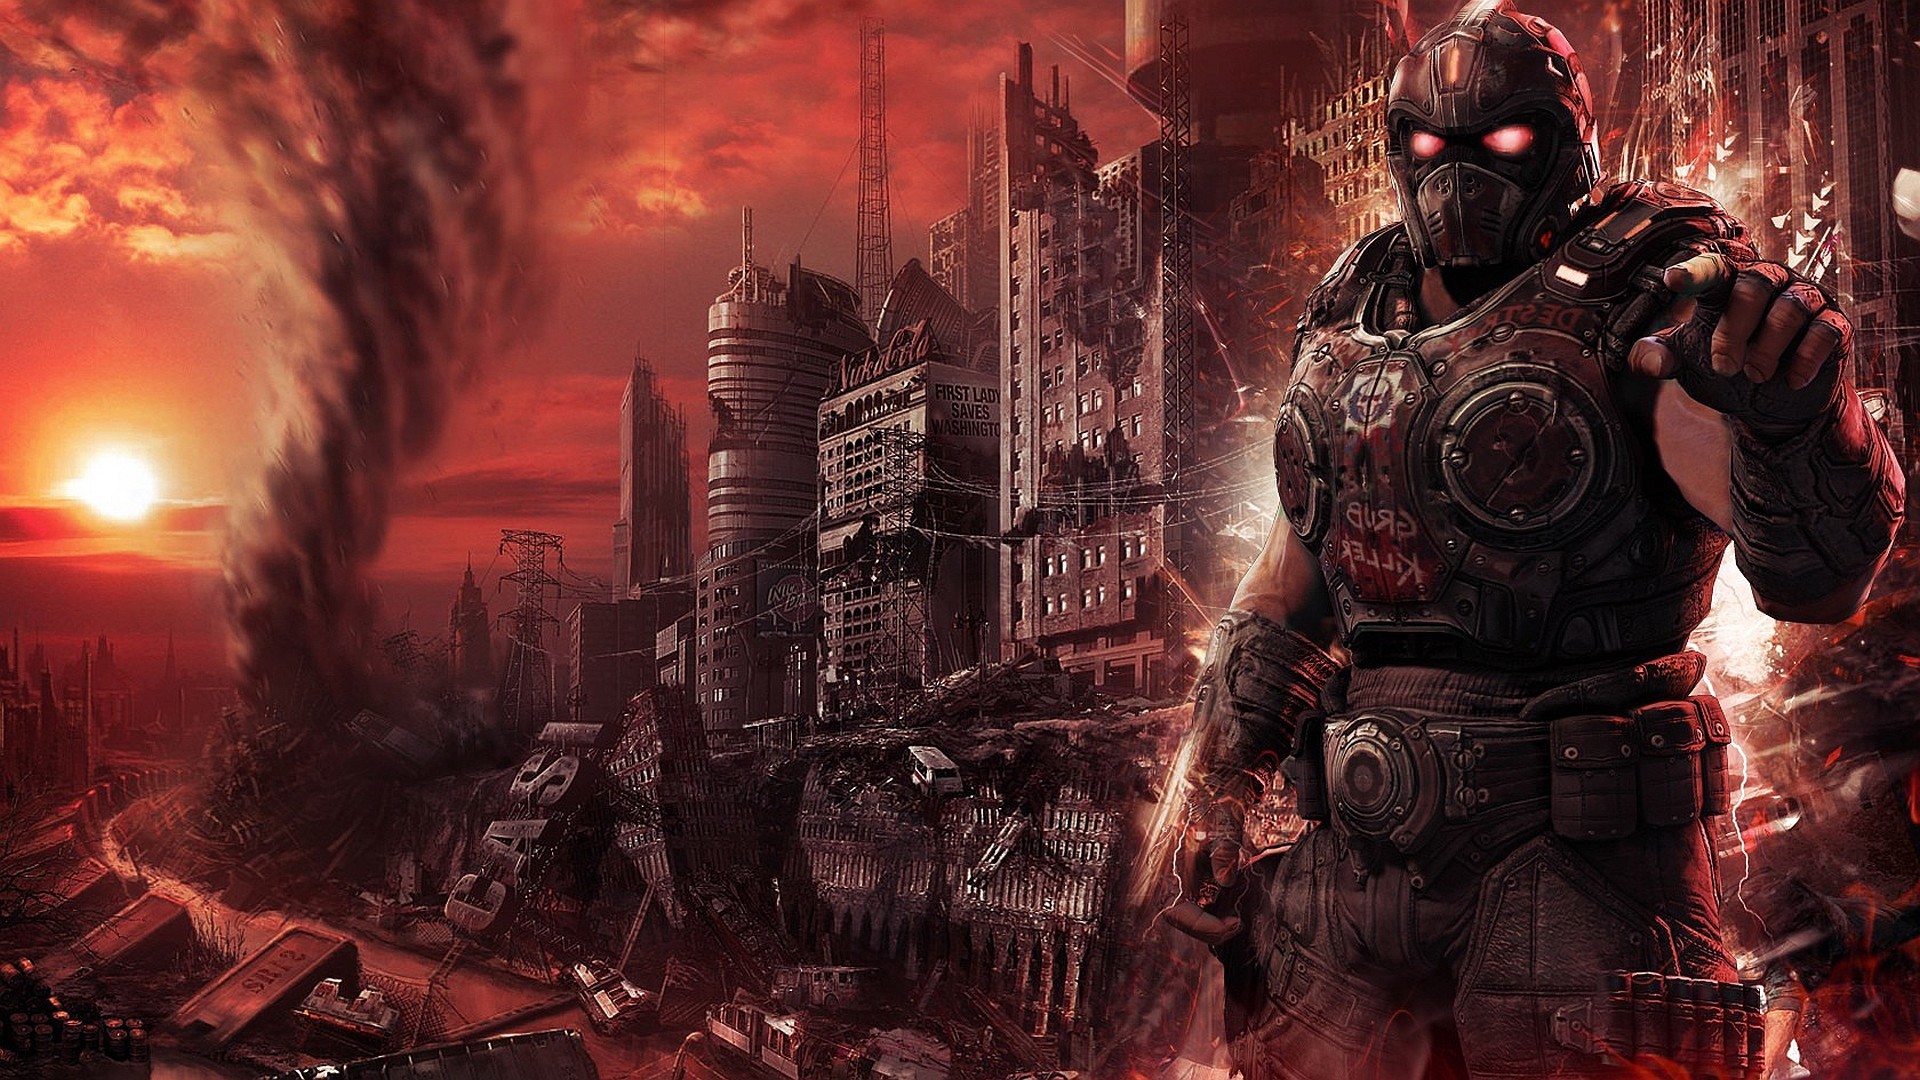 Fallout 4 Wallpaper Hd Bing Images - Fallout 4 - HD Wallpaper 